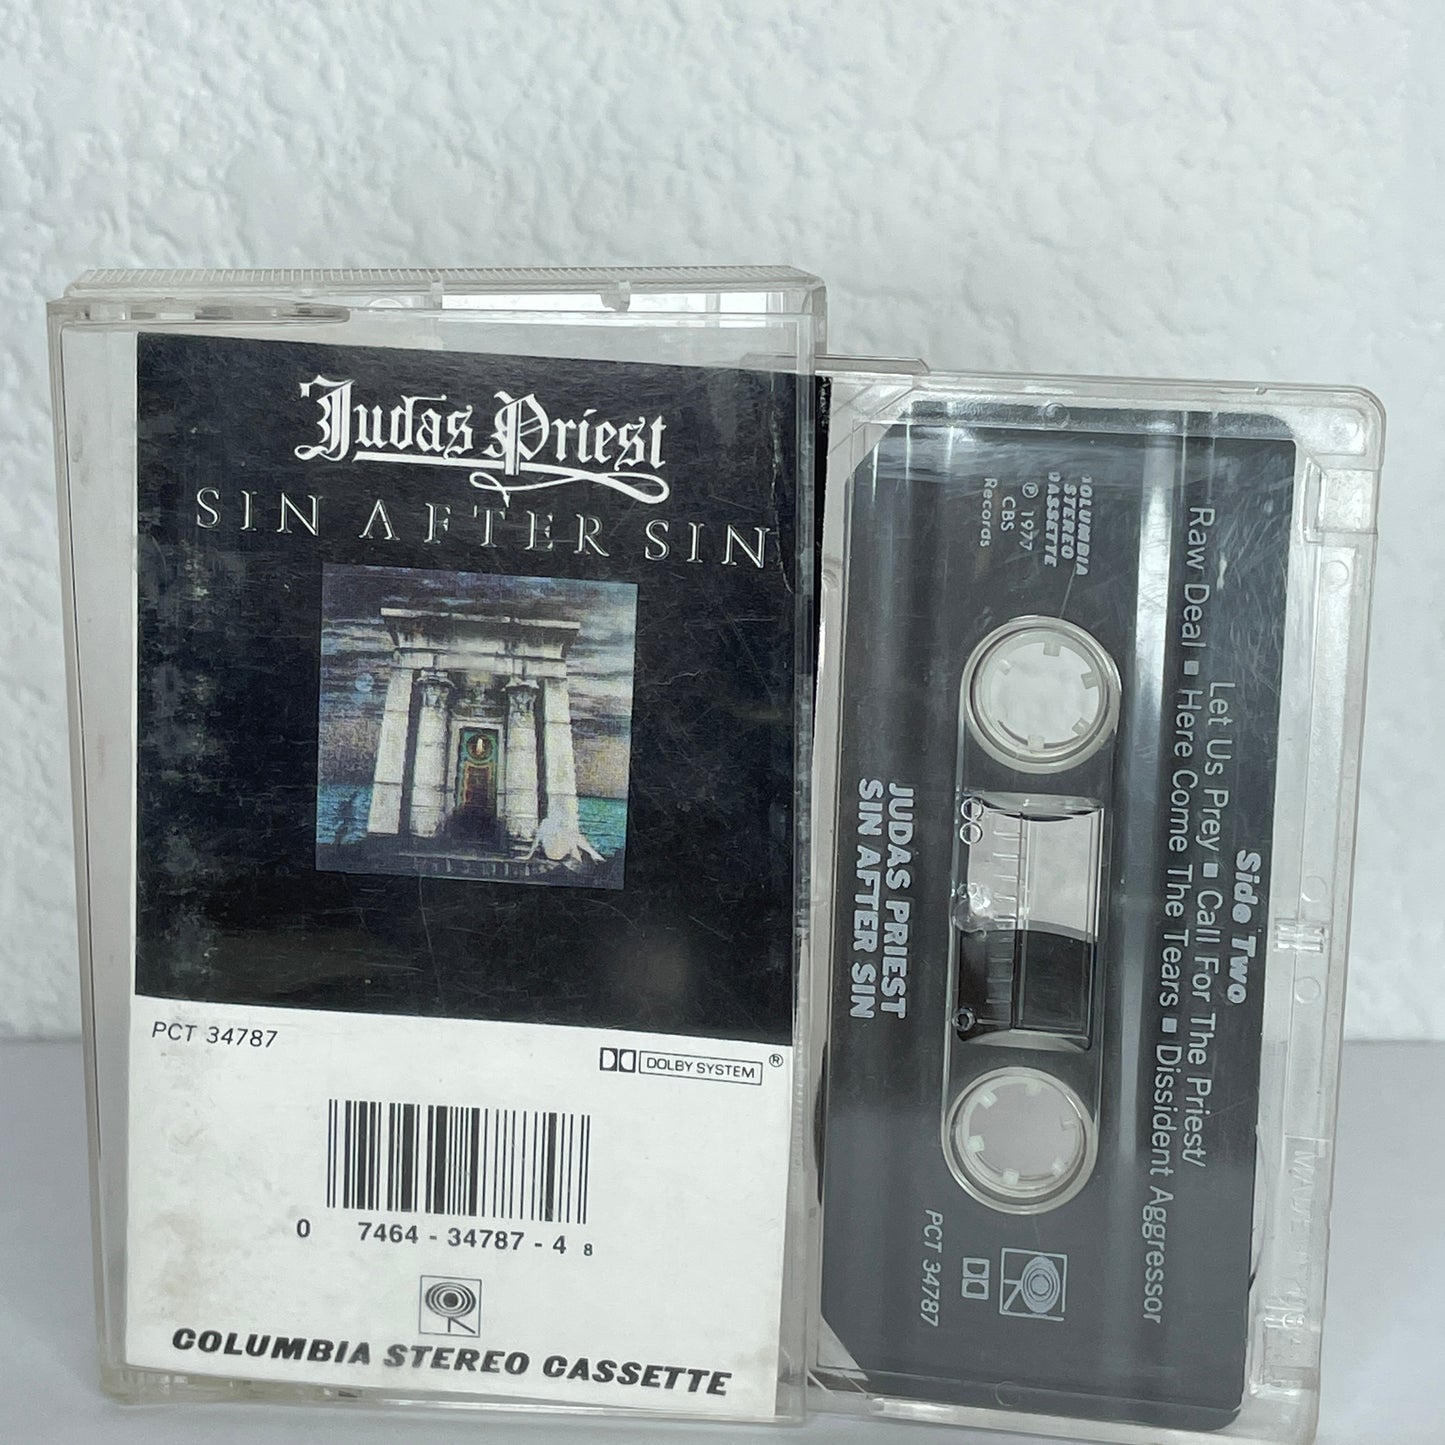 Judas Priest - Sin After Sin original cassette tape